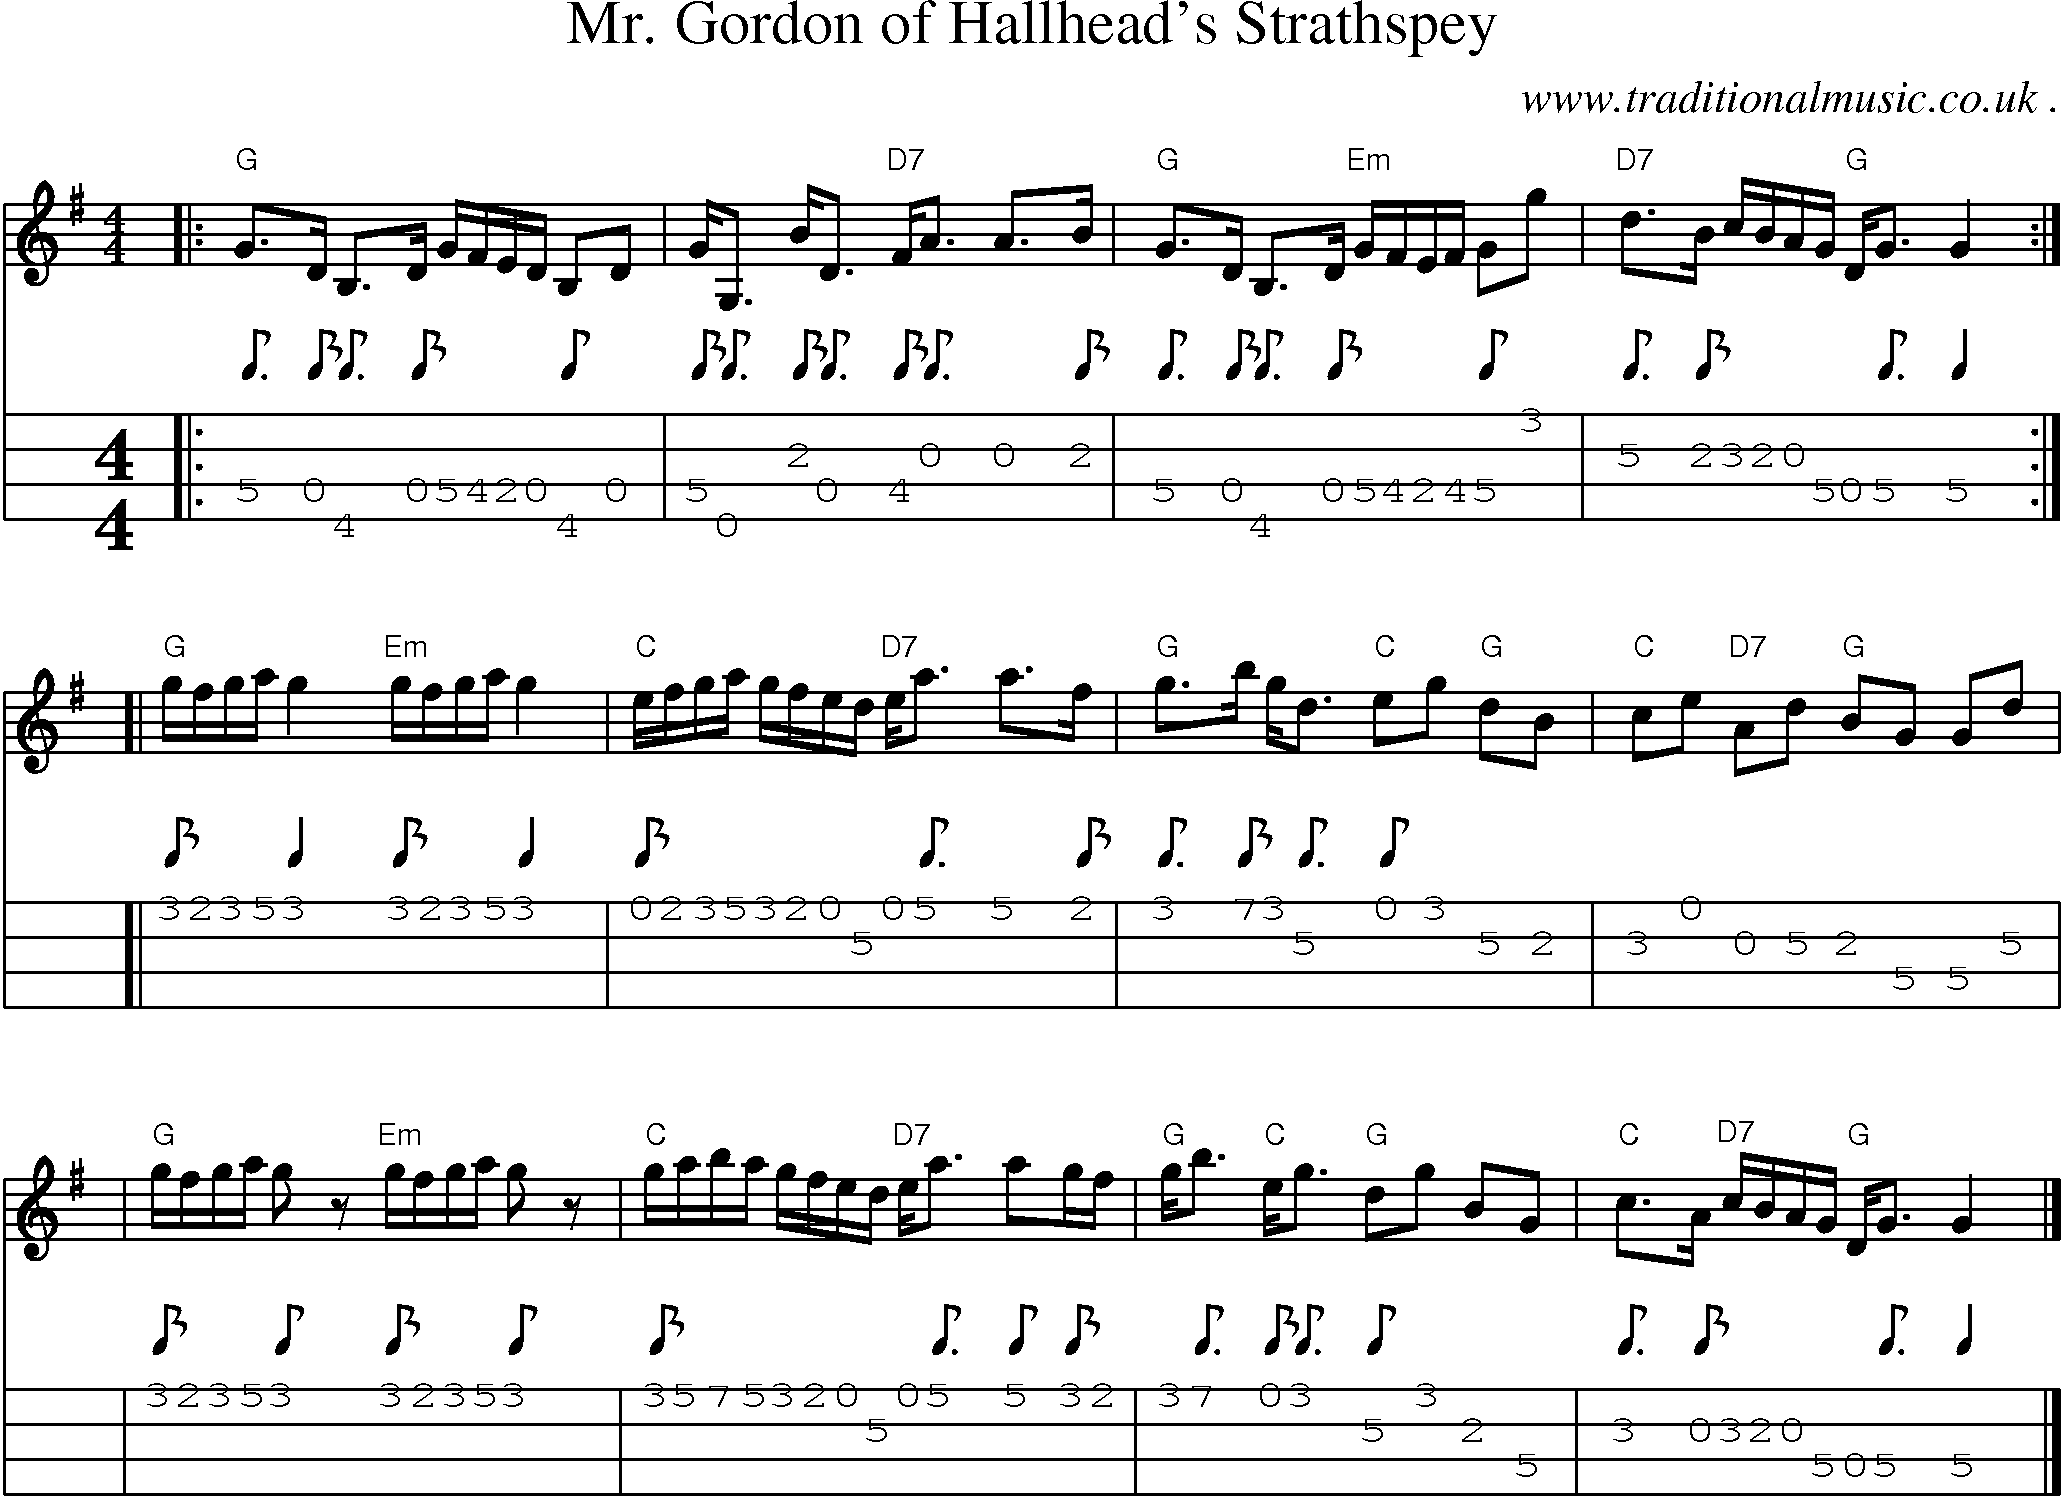 Sheet-music  score, Chords and Mandolin Tabs for Mr Gordon Of Hallheads Strathspey